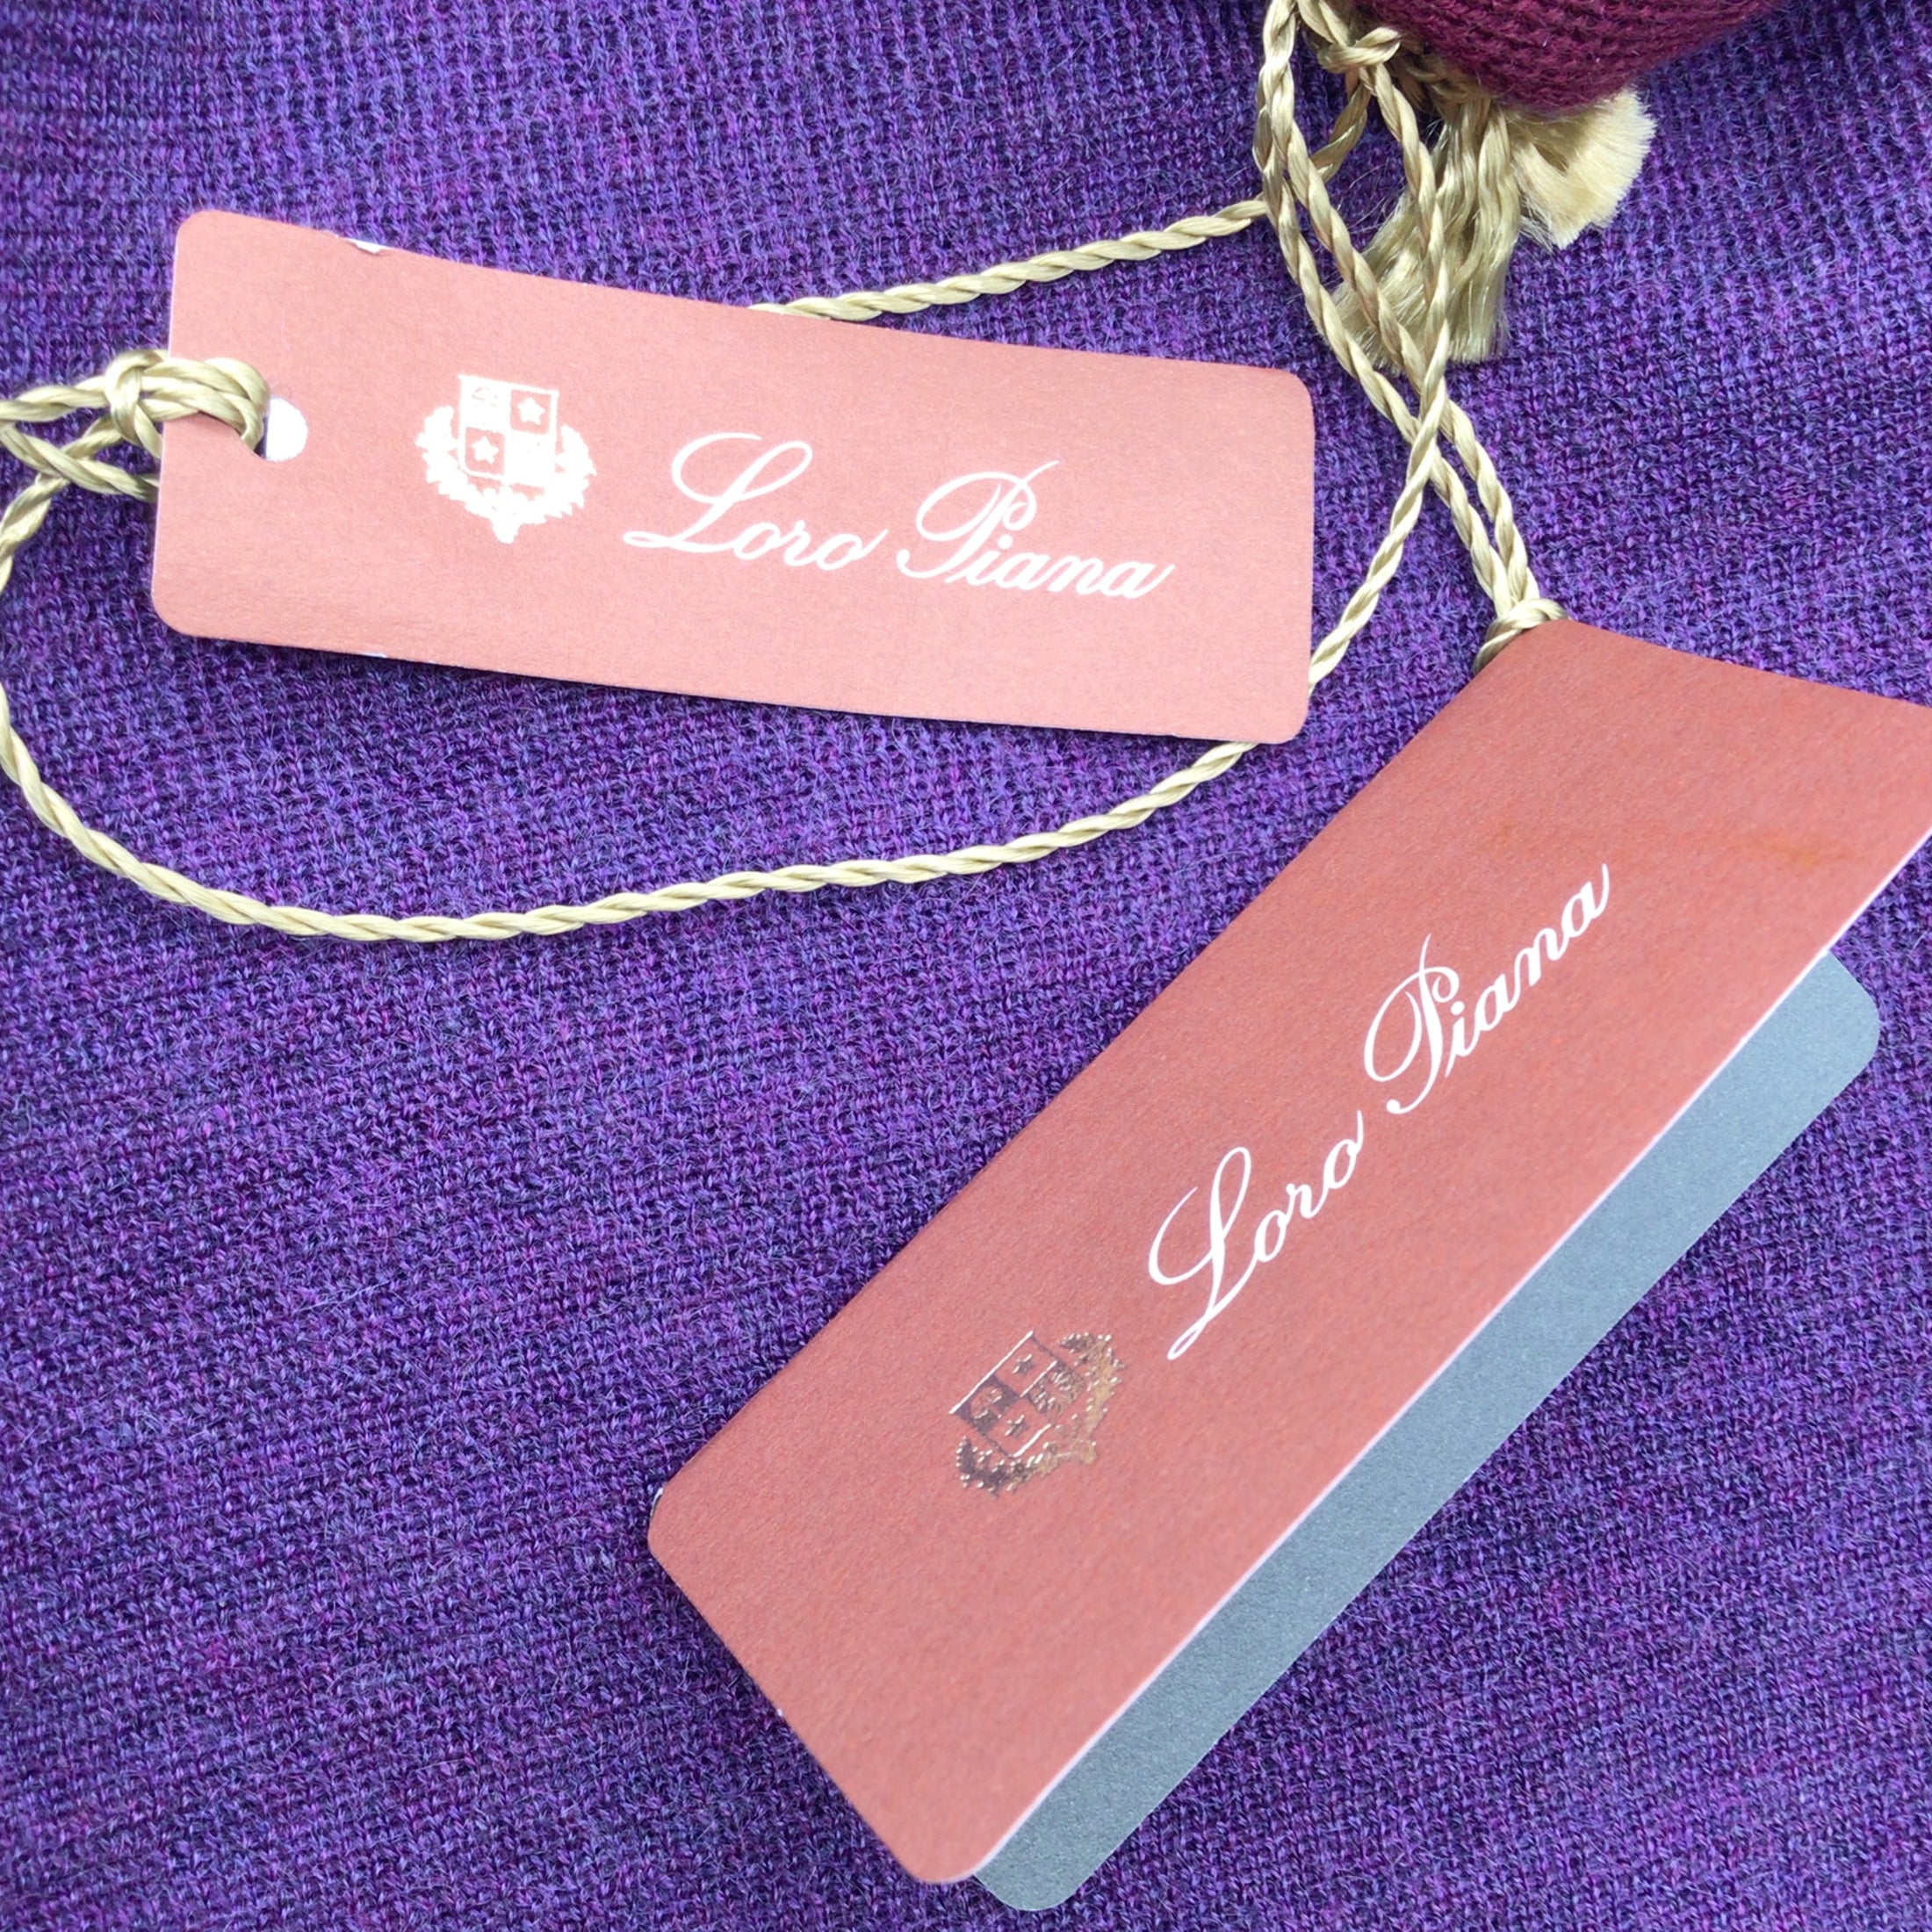 Loro Piana Purple / Burgundy Two-Tone Cashmere and Silk Knit Scarf